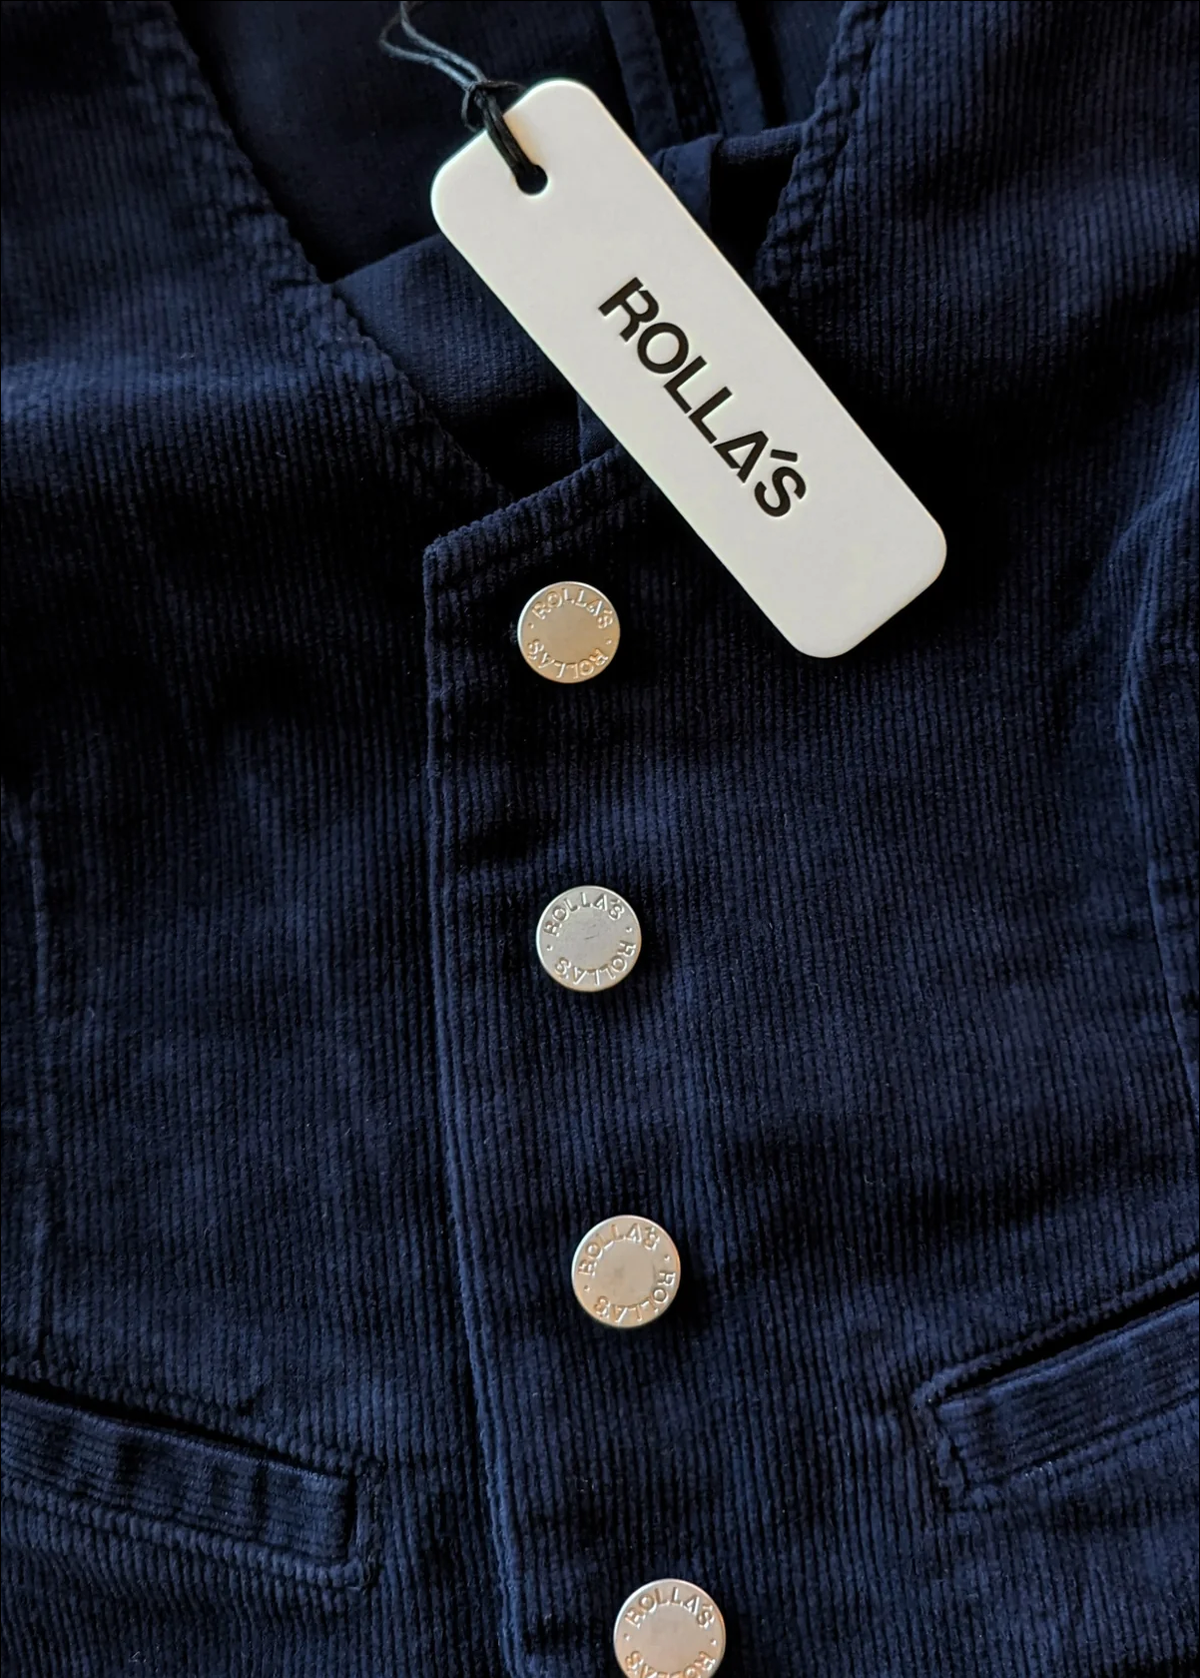 Rolla's Jeans Navy Corduroy Dallas Vest: 70s inspired vest with a v-neckline, button front, slit pockets, and adjustable buckle at back. 